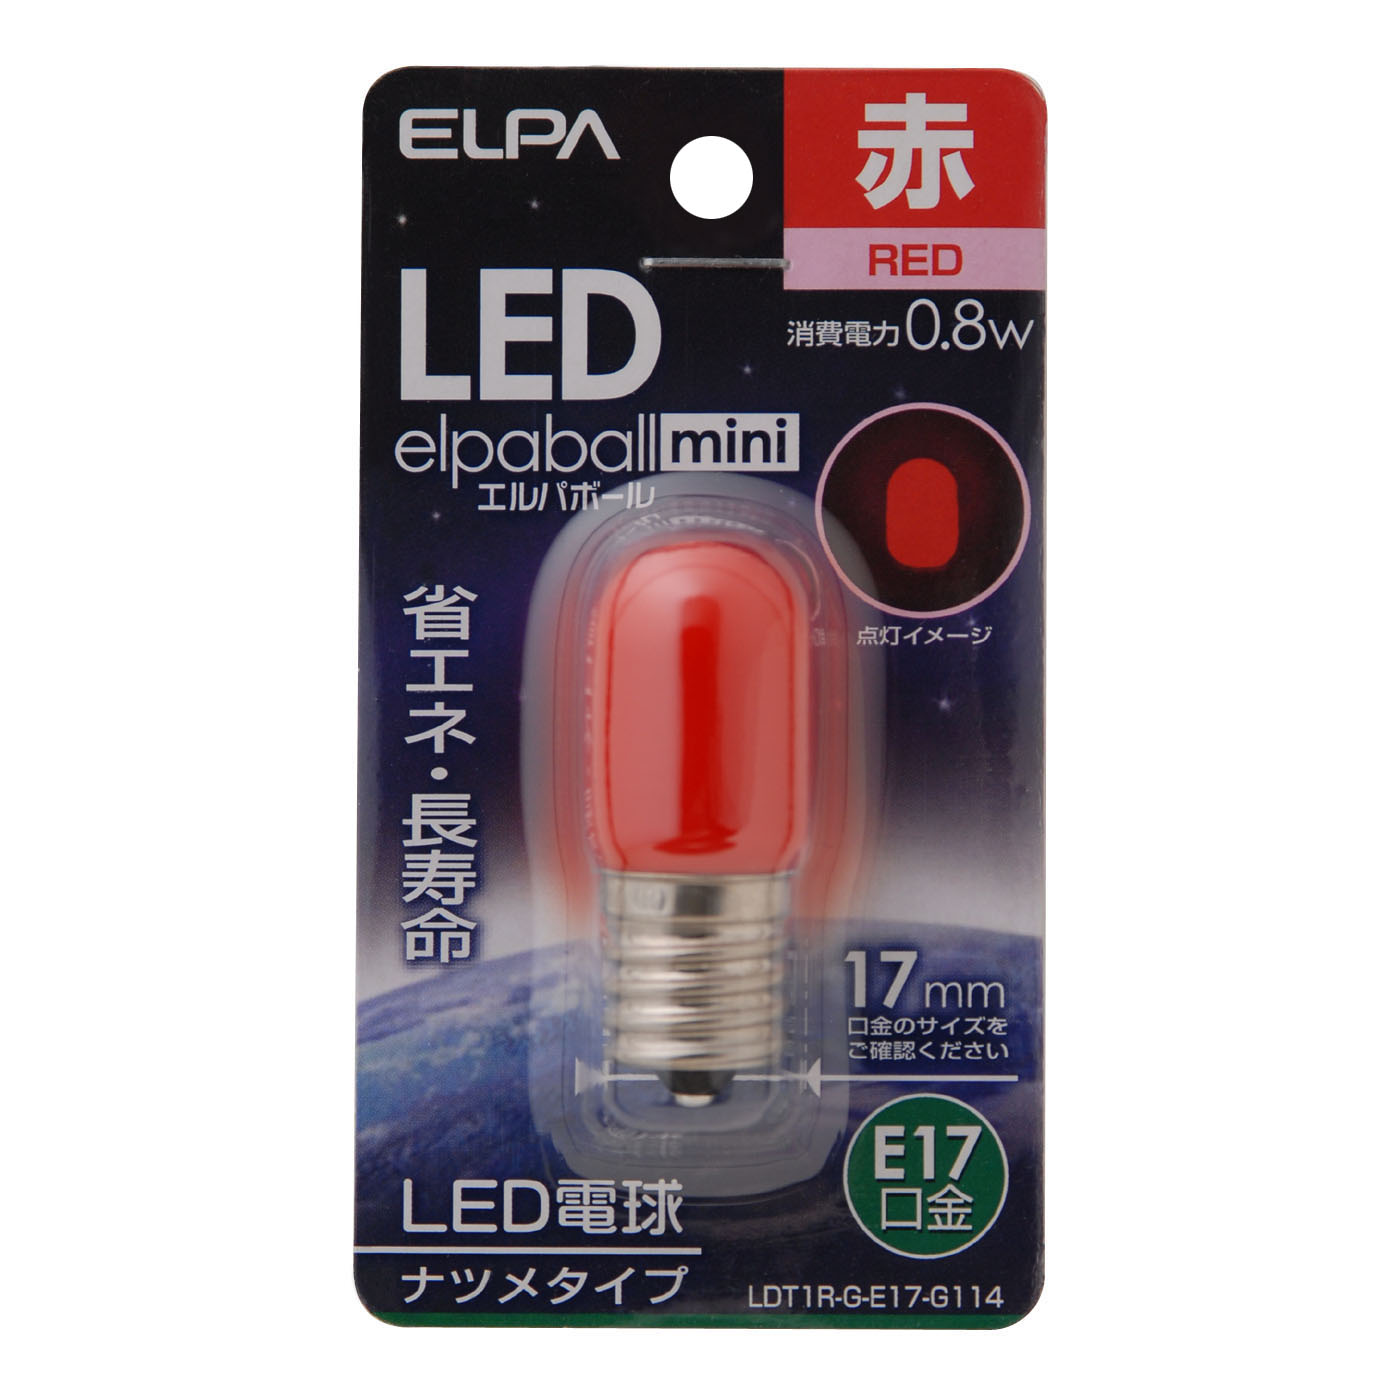 ELPA 朝日電器 LED電球エルパボールmini 装飾電球ナツメ球タイプ 0.8W赤色 E17LDT1R-G-E17-G114